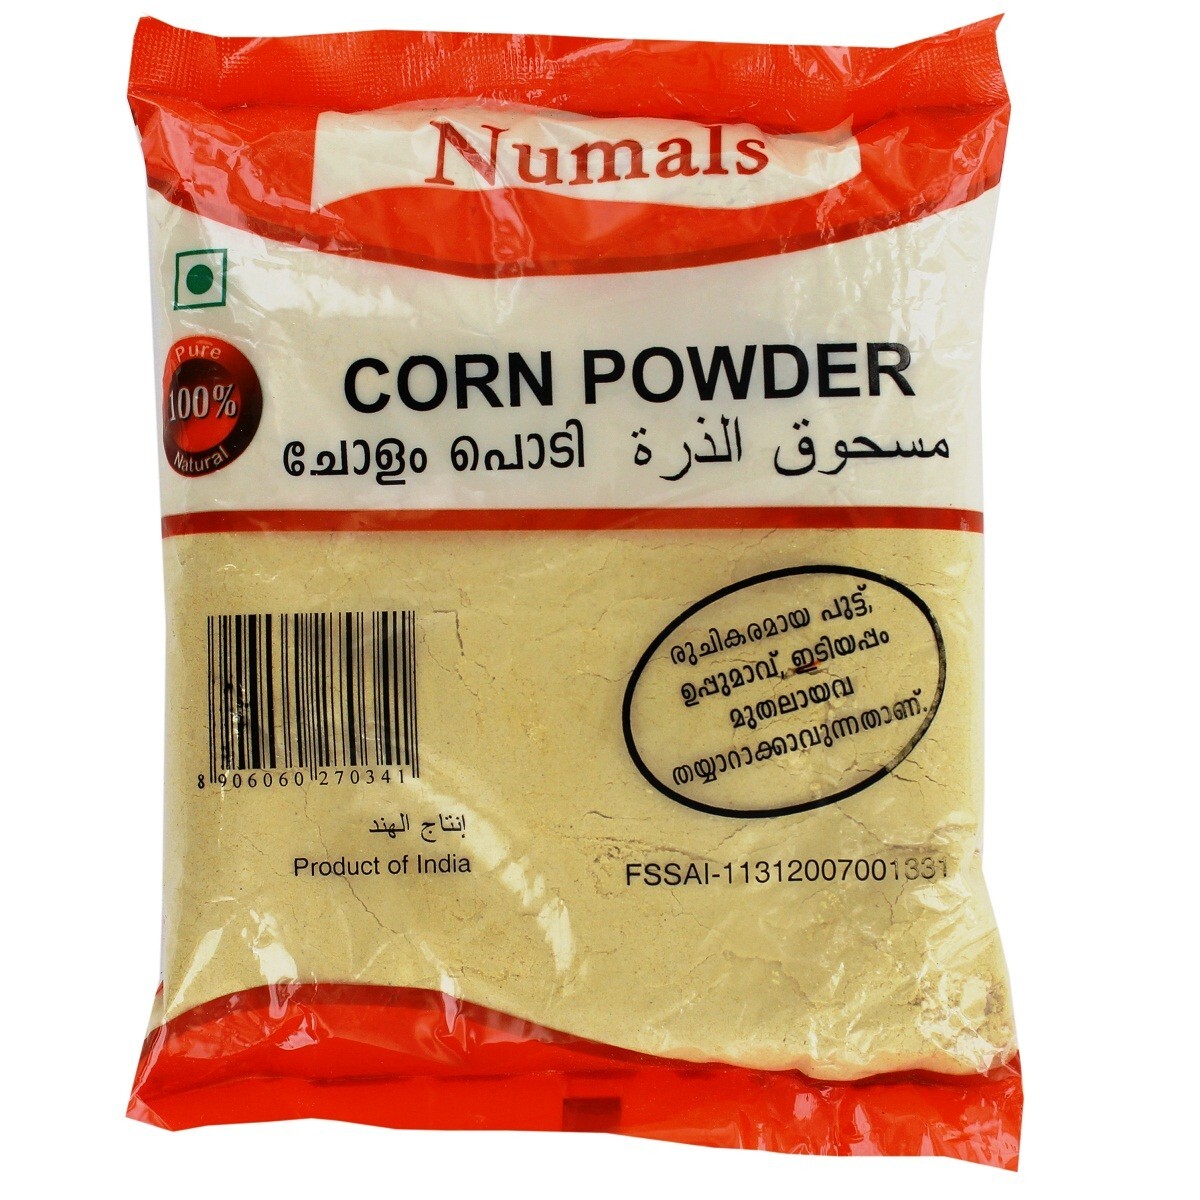 Numals Corn Powder 500g